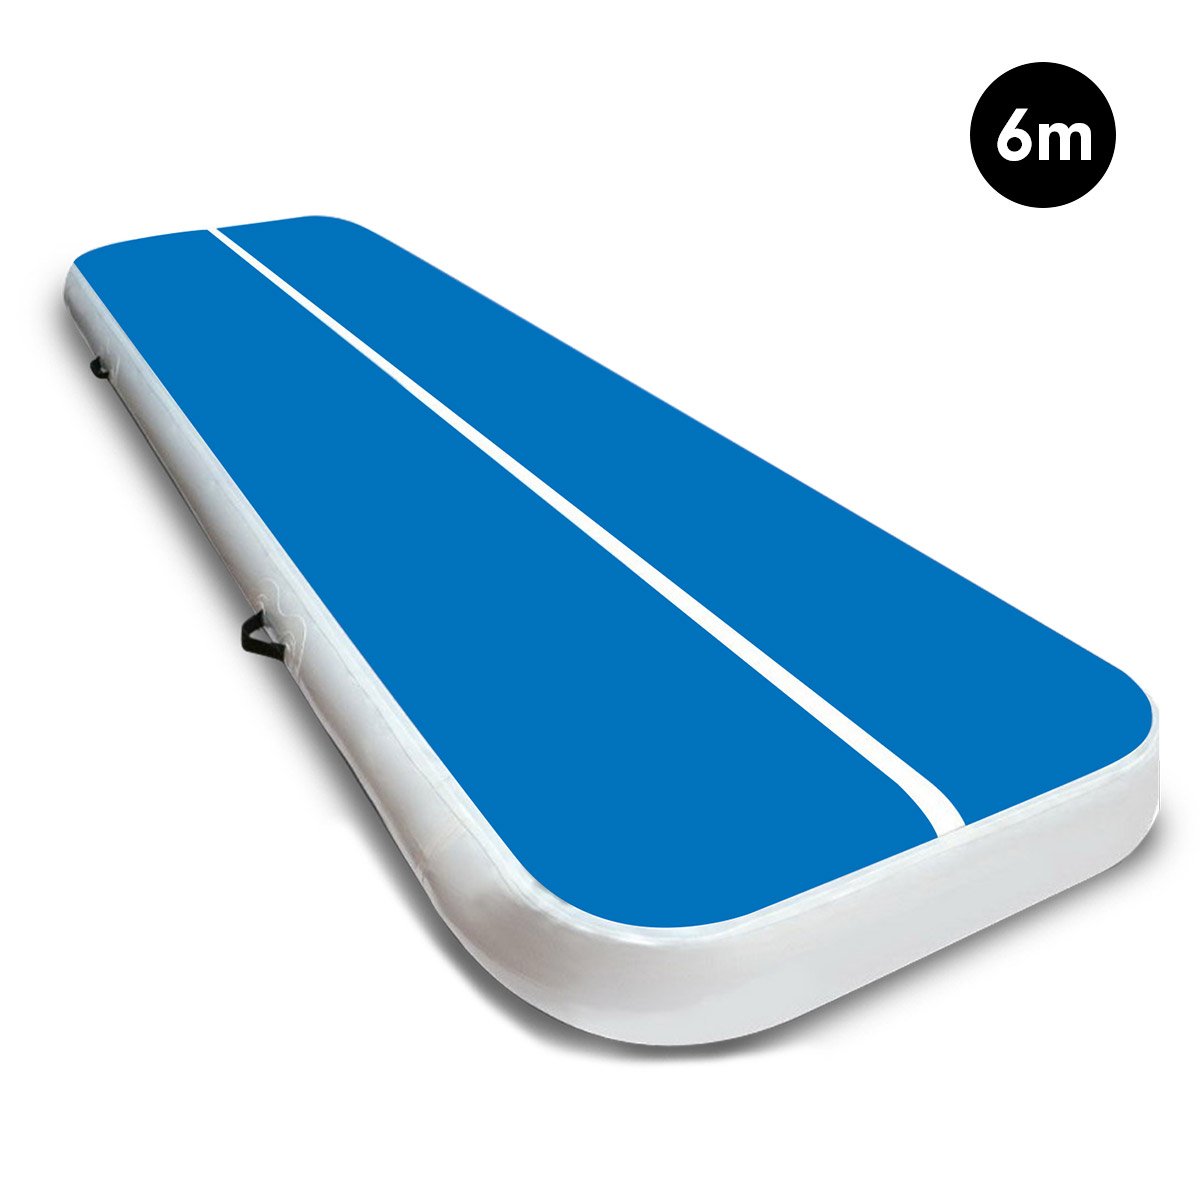 6m x 2m Air Track Gymnastics Mat Tumbling Exercise - Blue White 2